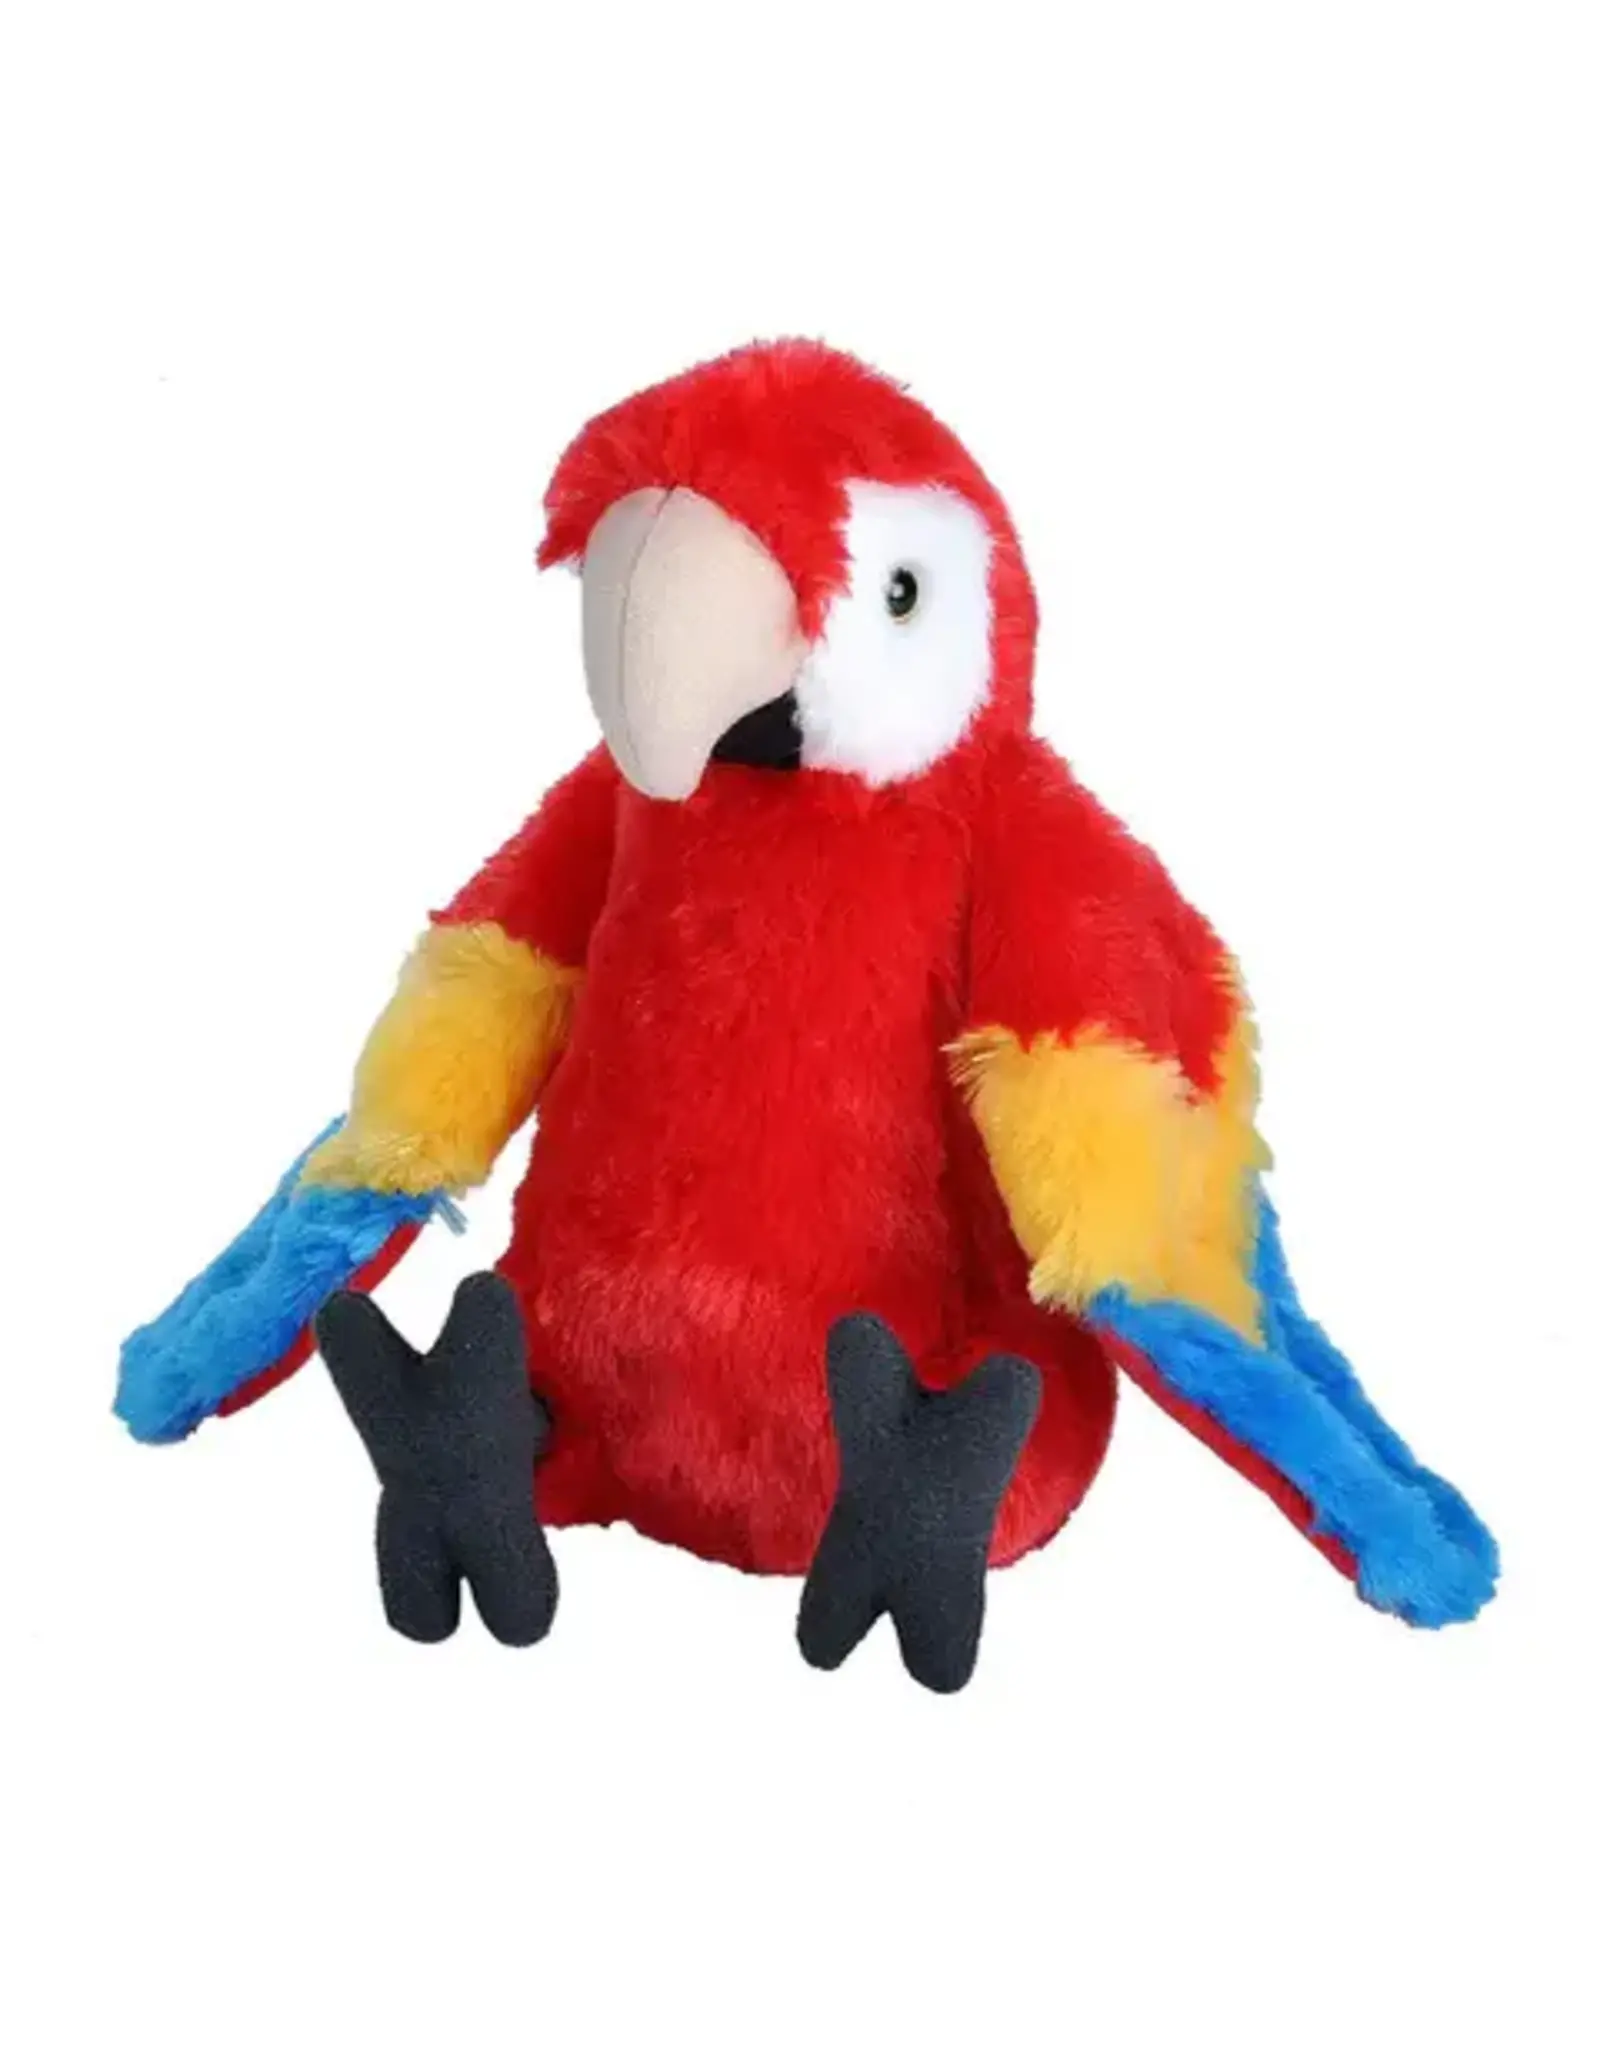 Macaw Scarlet Stuffed Animal - 8"